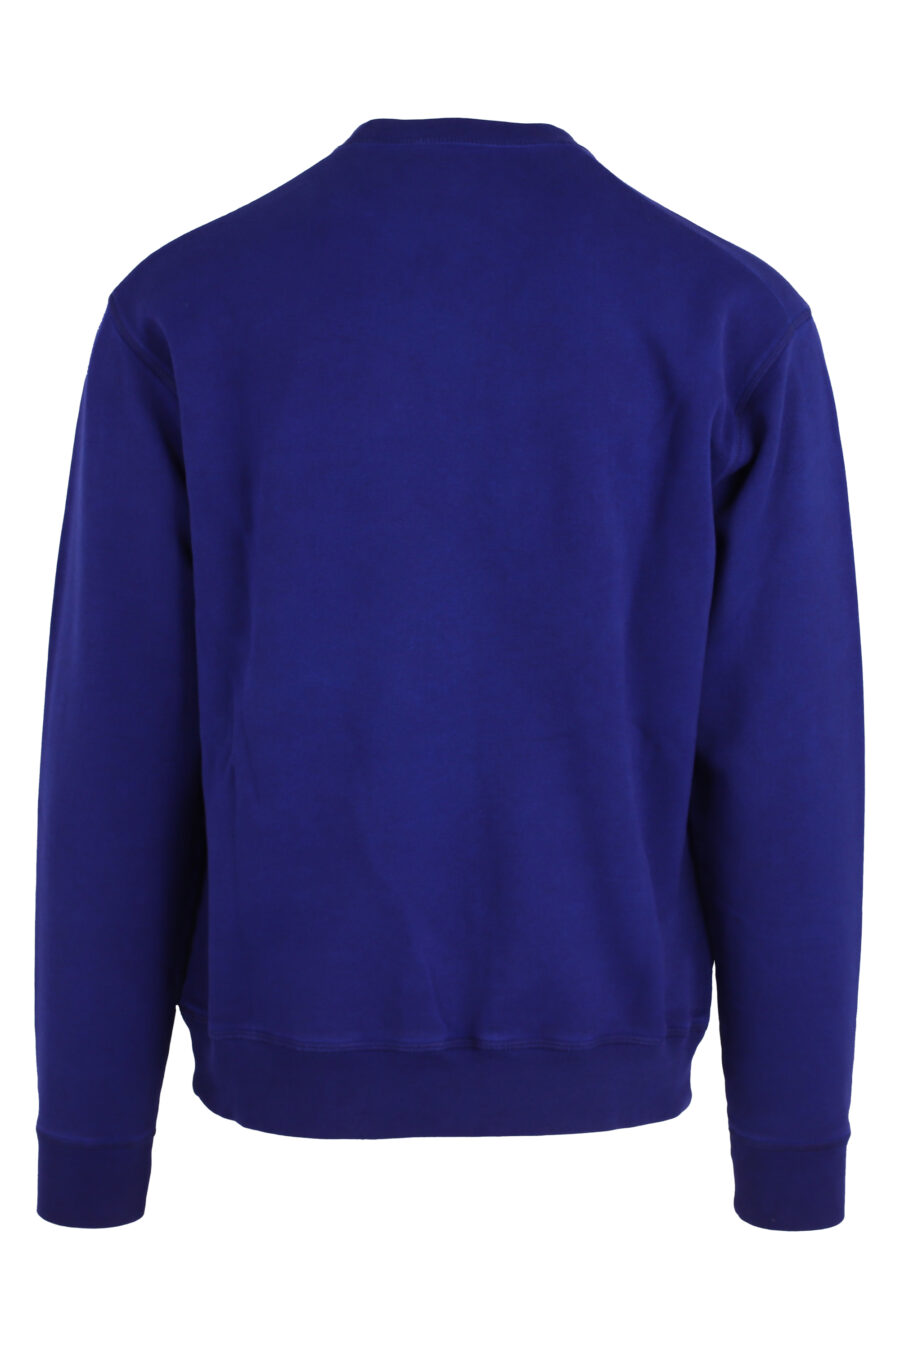 Blue sweatshirt with white outline logo - IMG 4754